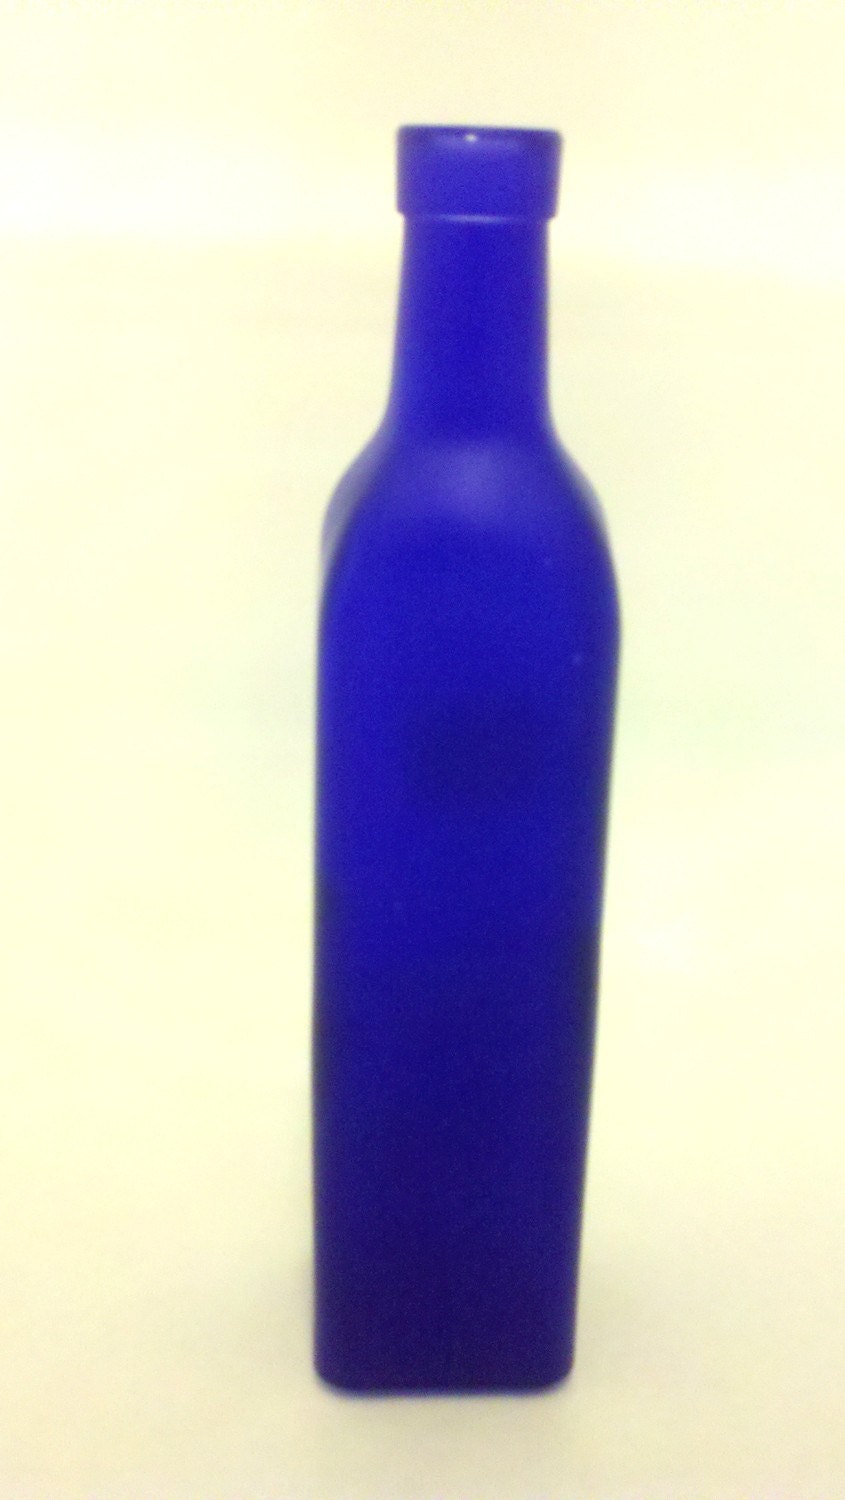 Blue Bottles Glass Vintage Collection Decor Wedding Royal Blue Navy